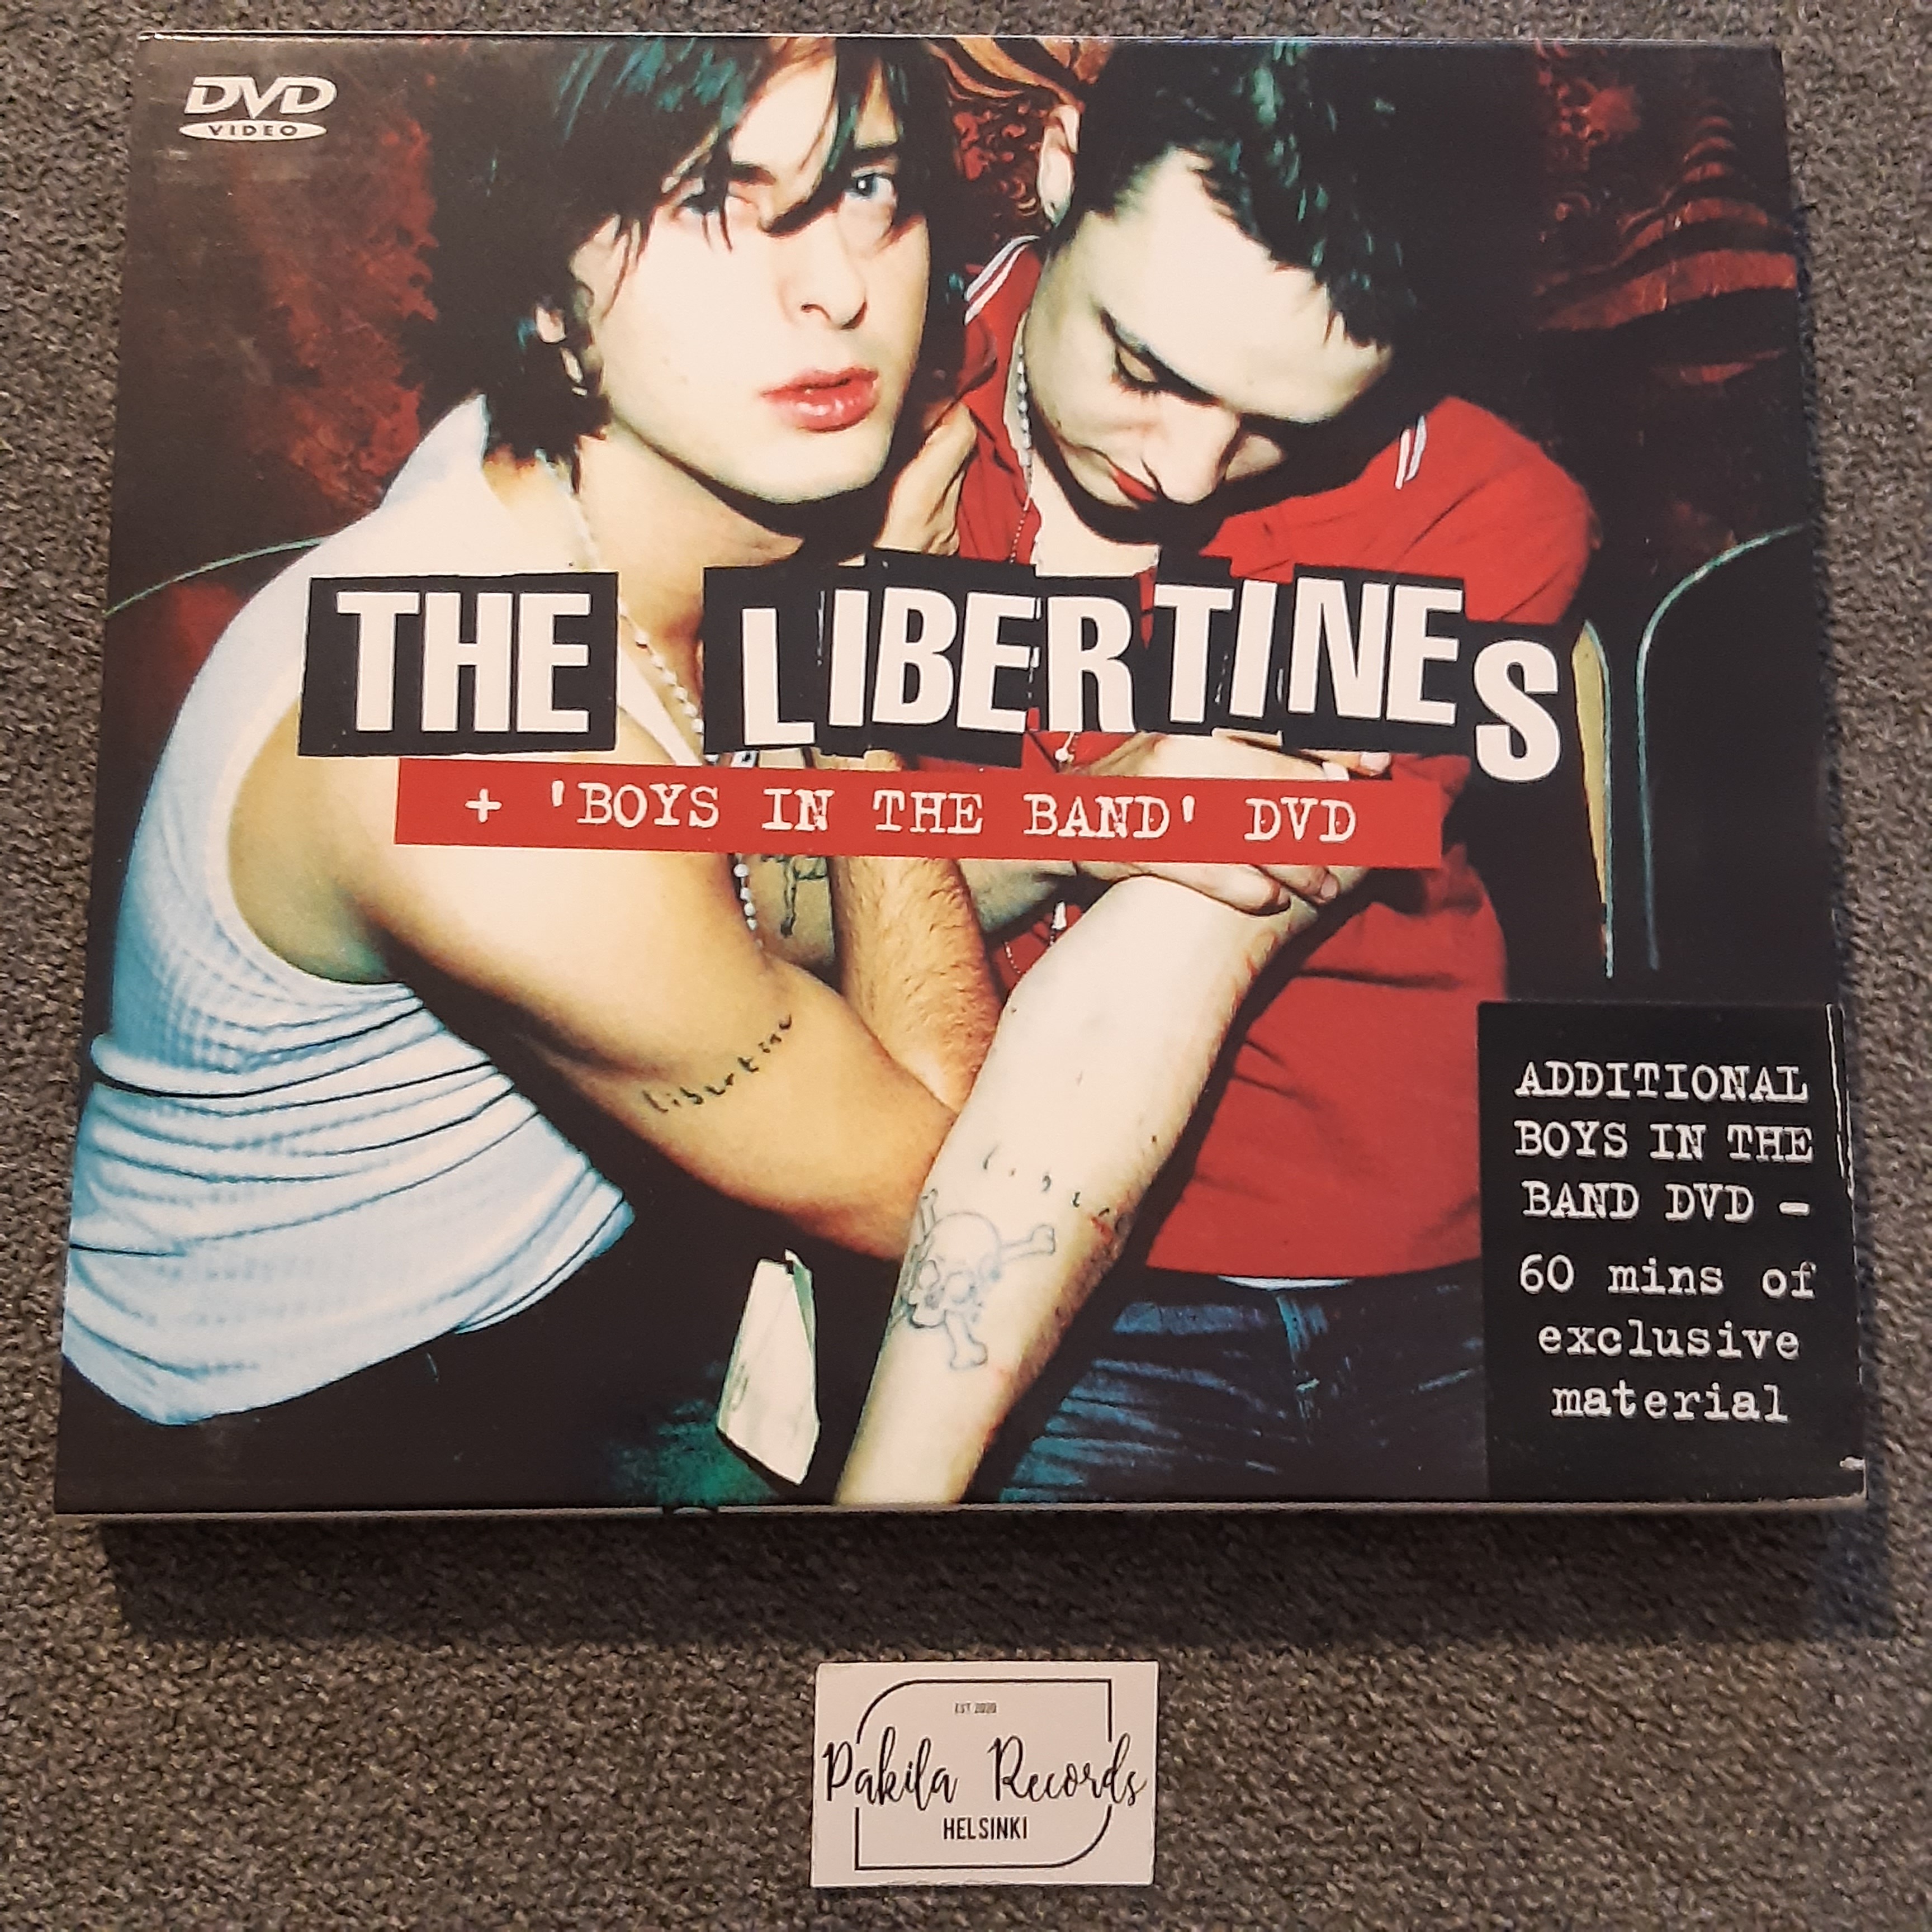 The Libertines - The Libertines - CD + DVD (käytetty)